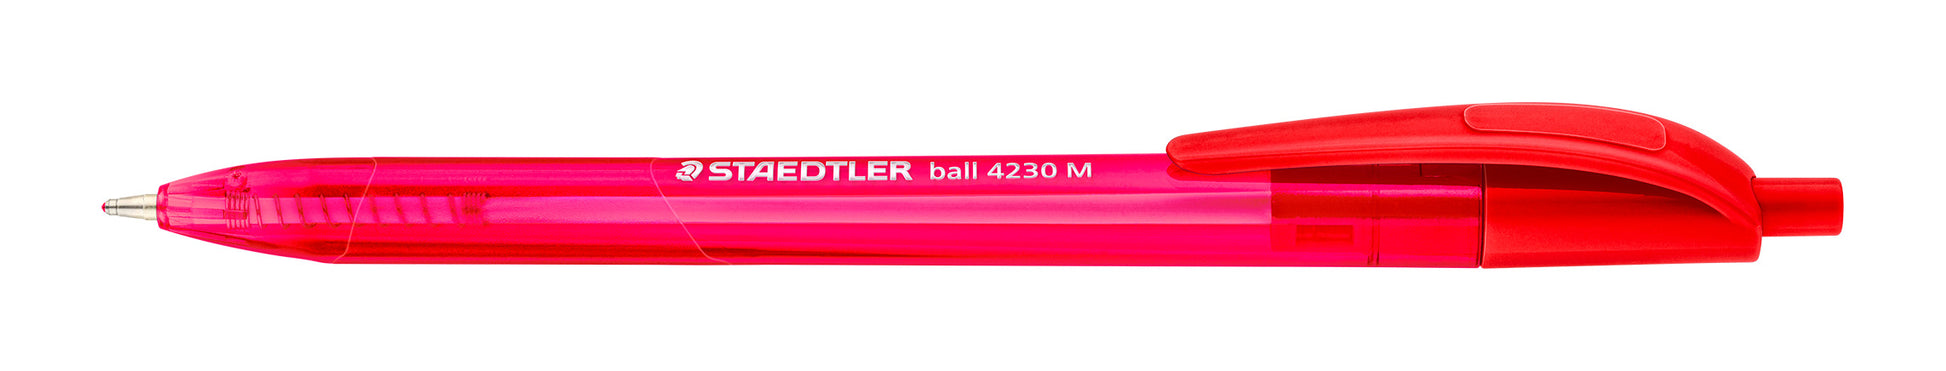 Staedtler Ballpoint Pen Triangular 4230 M-2 Retractable Medium Red